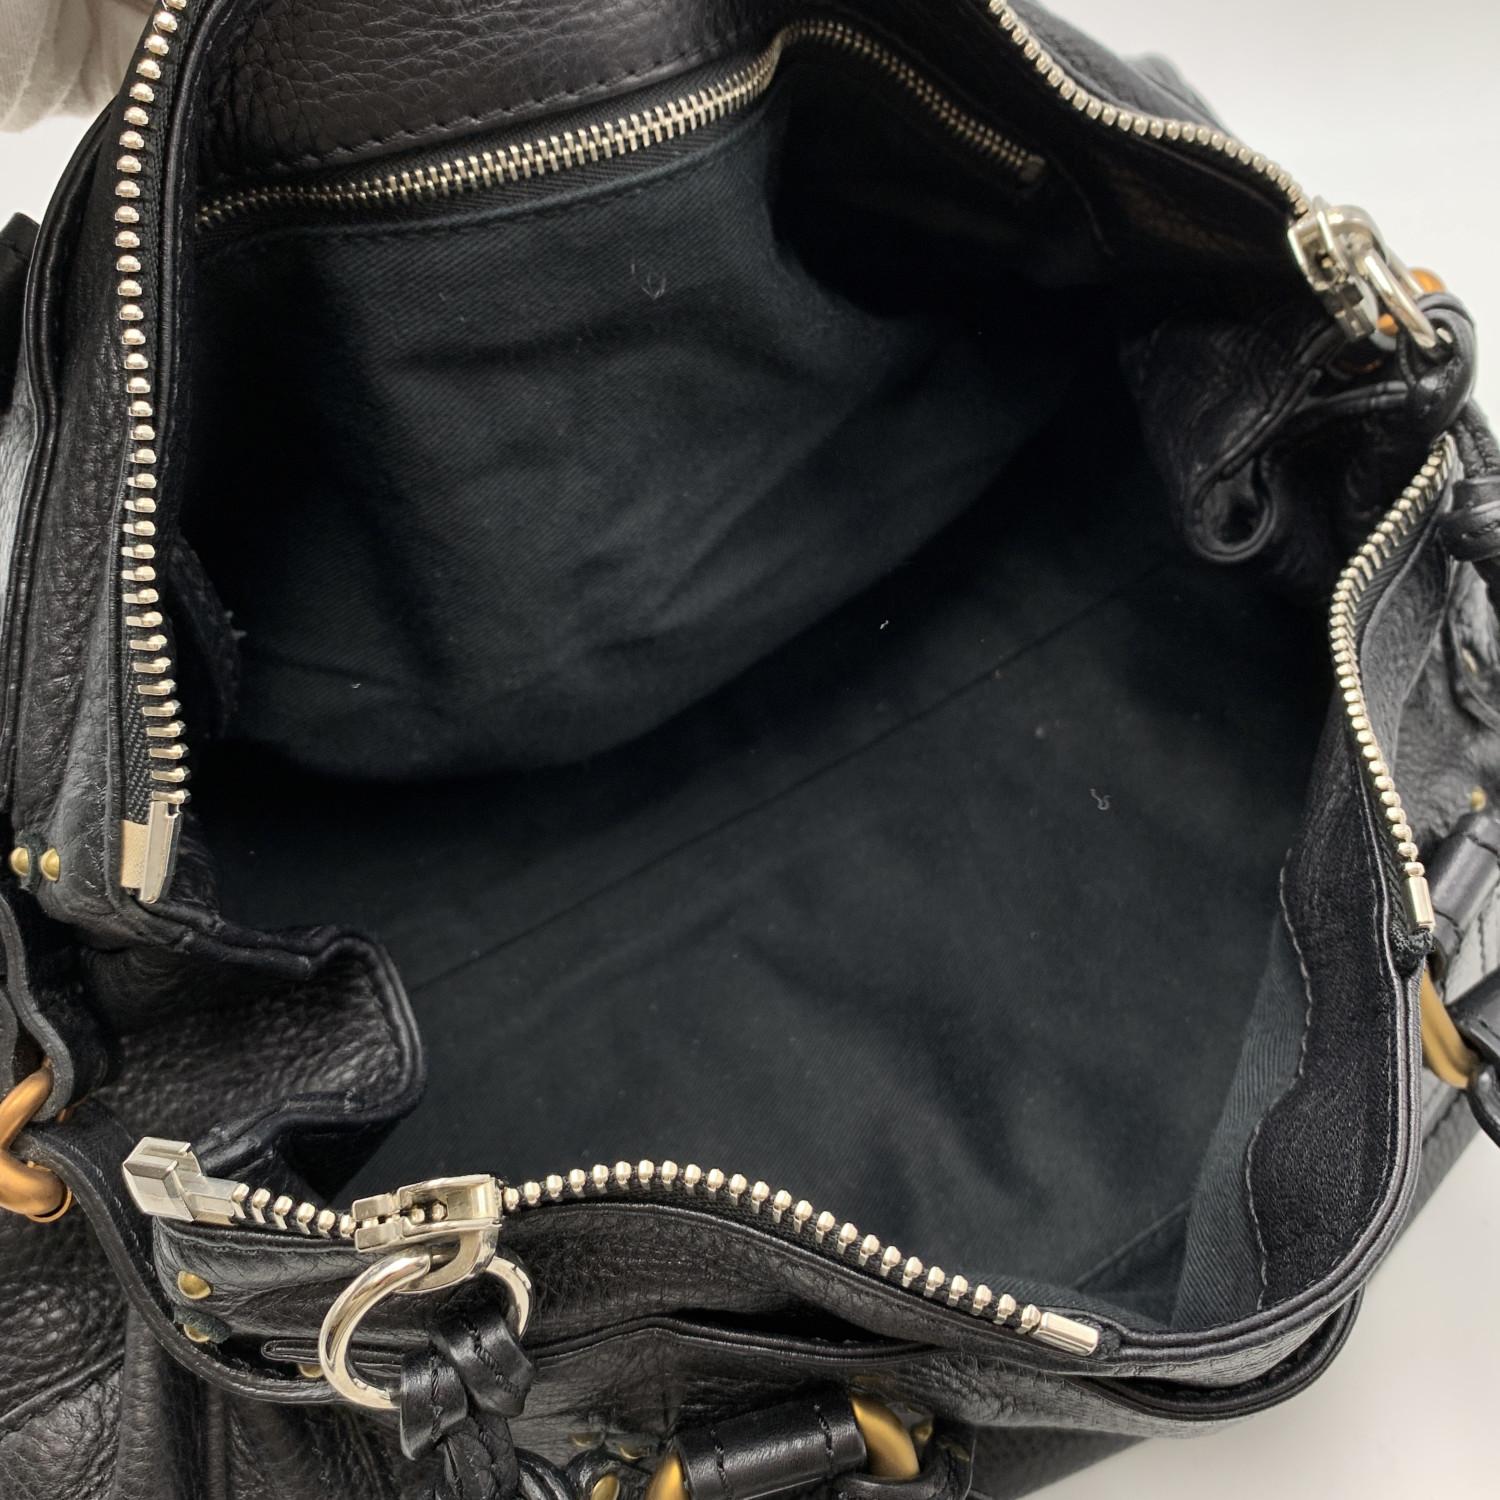 Chloe Black Leather Paddington Bag Tote Satchel Handbag 1